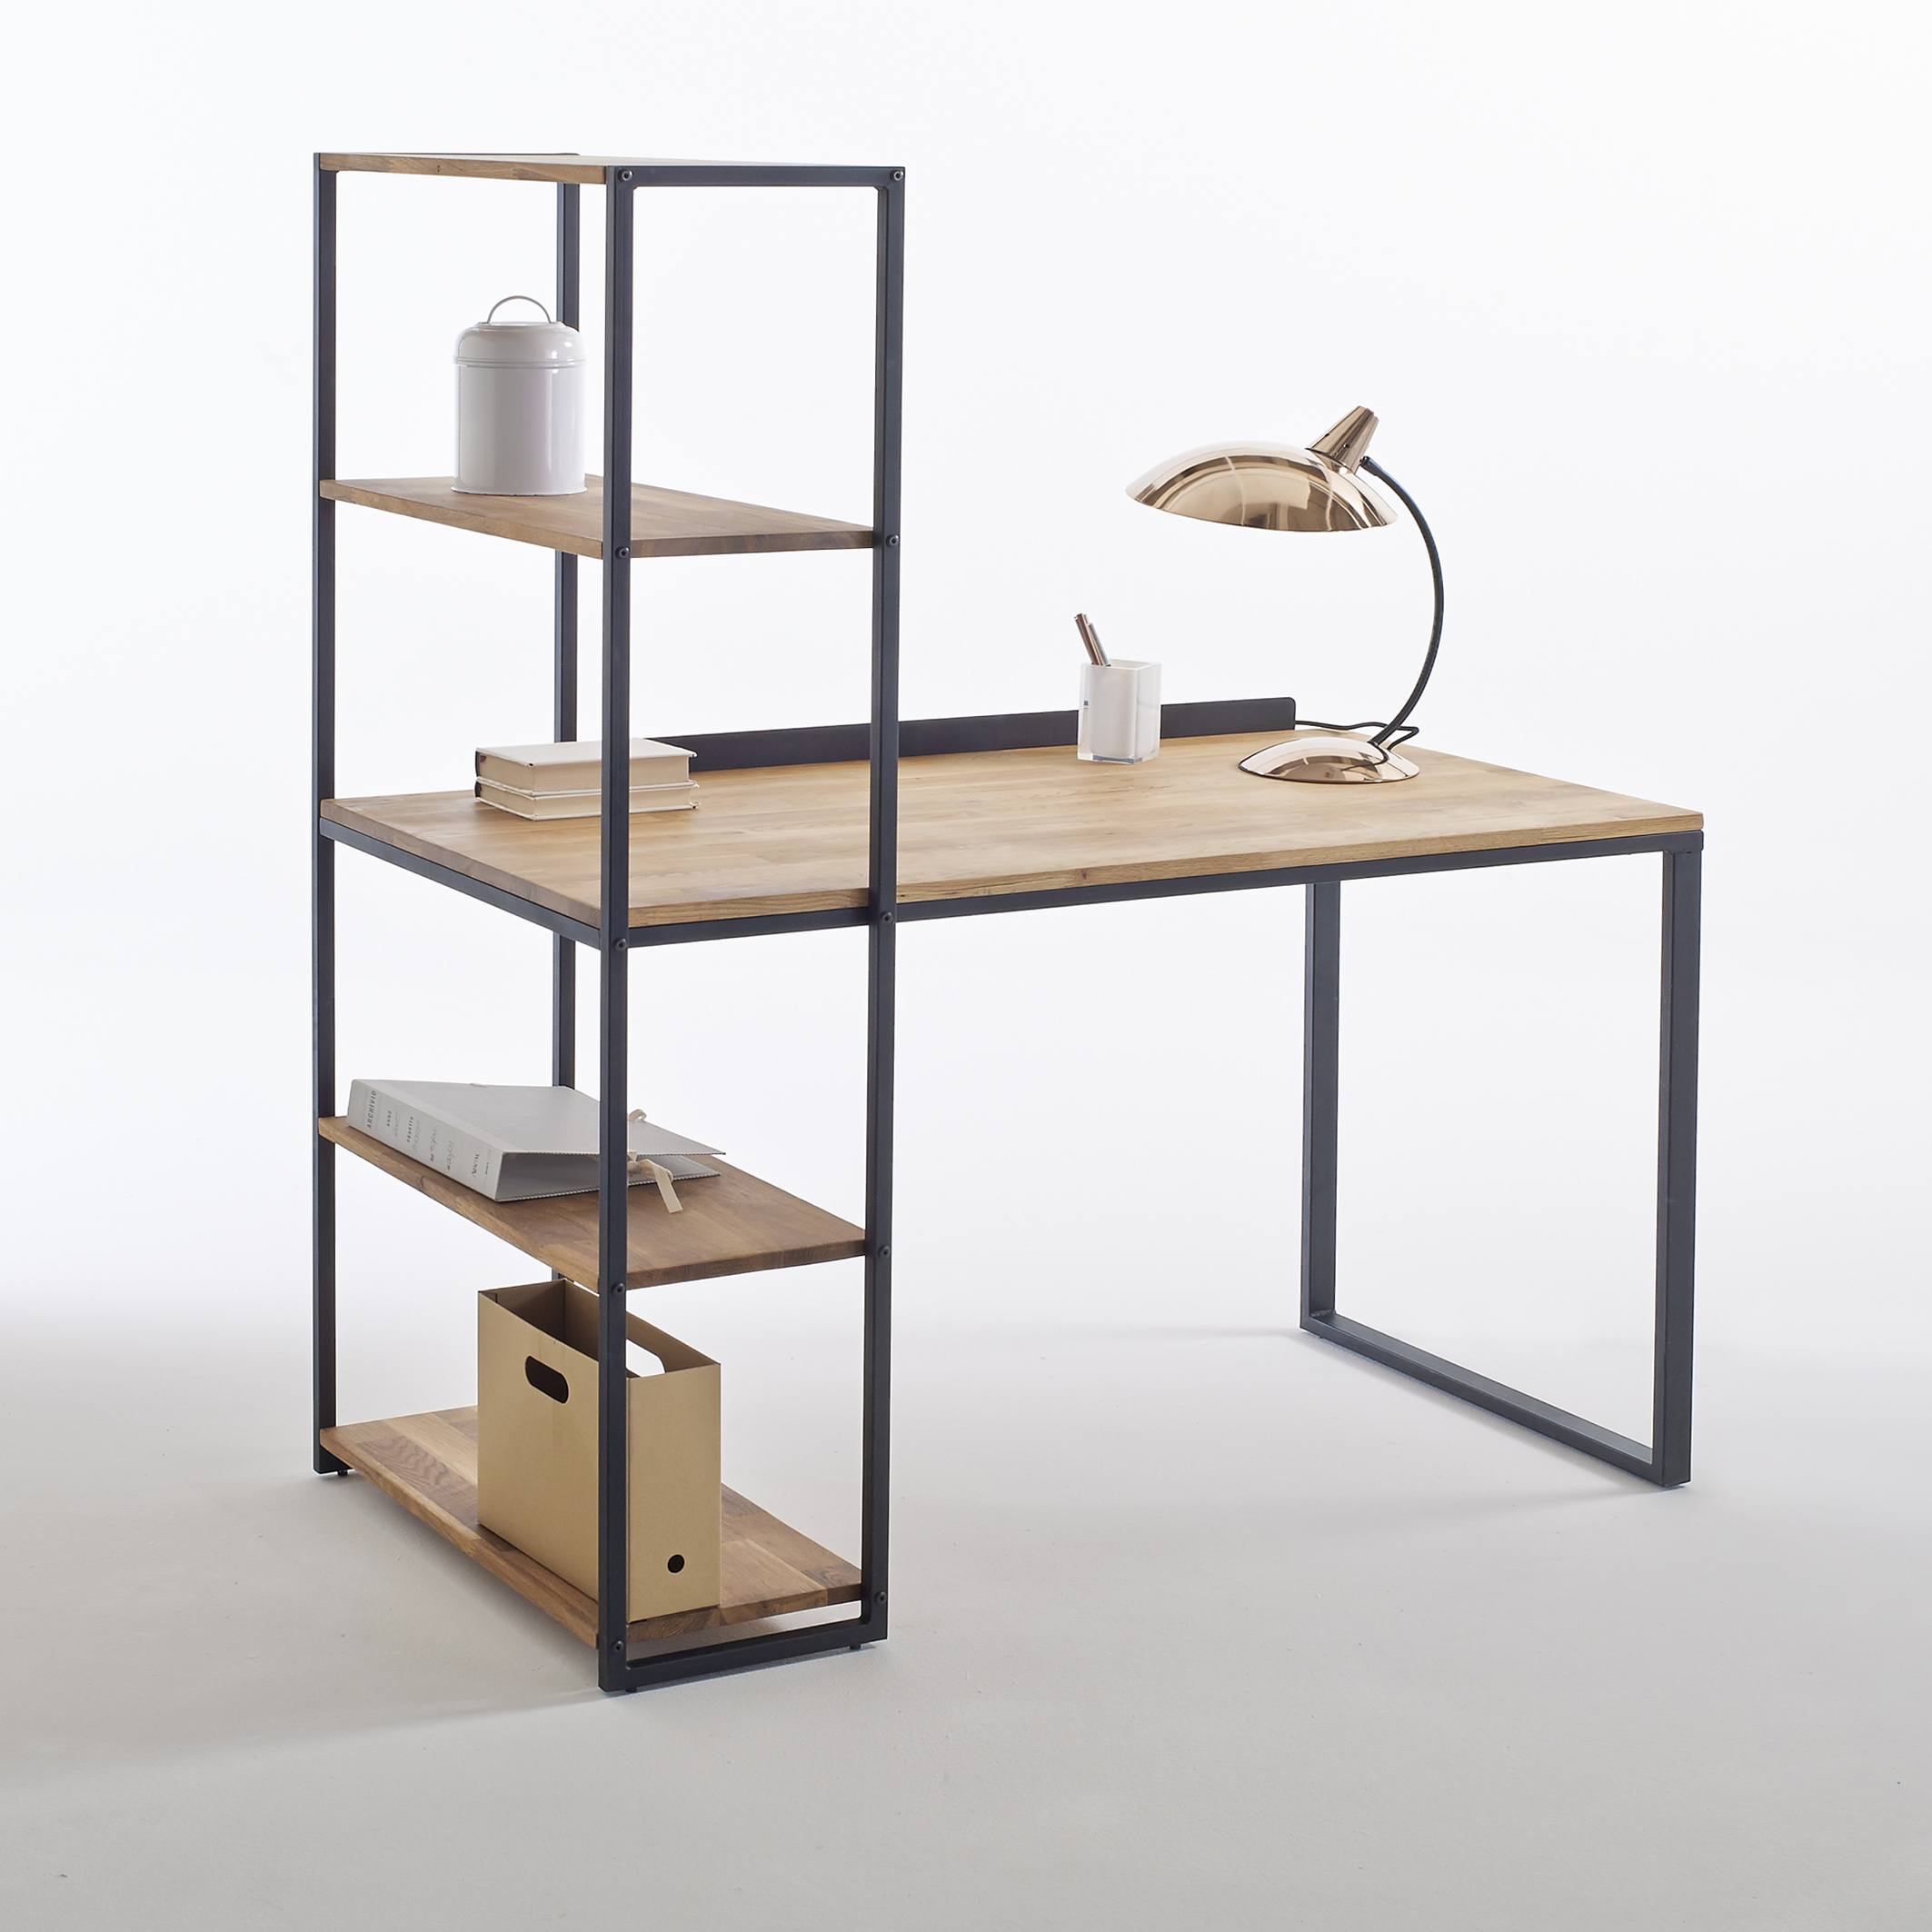 Hiba Steel Solid Oak Desk With Shelving, On Desk Shelving Unit